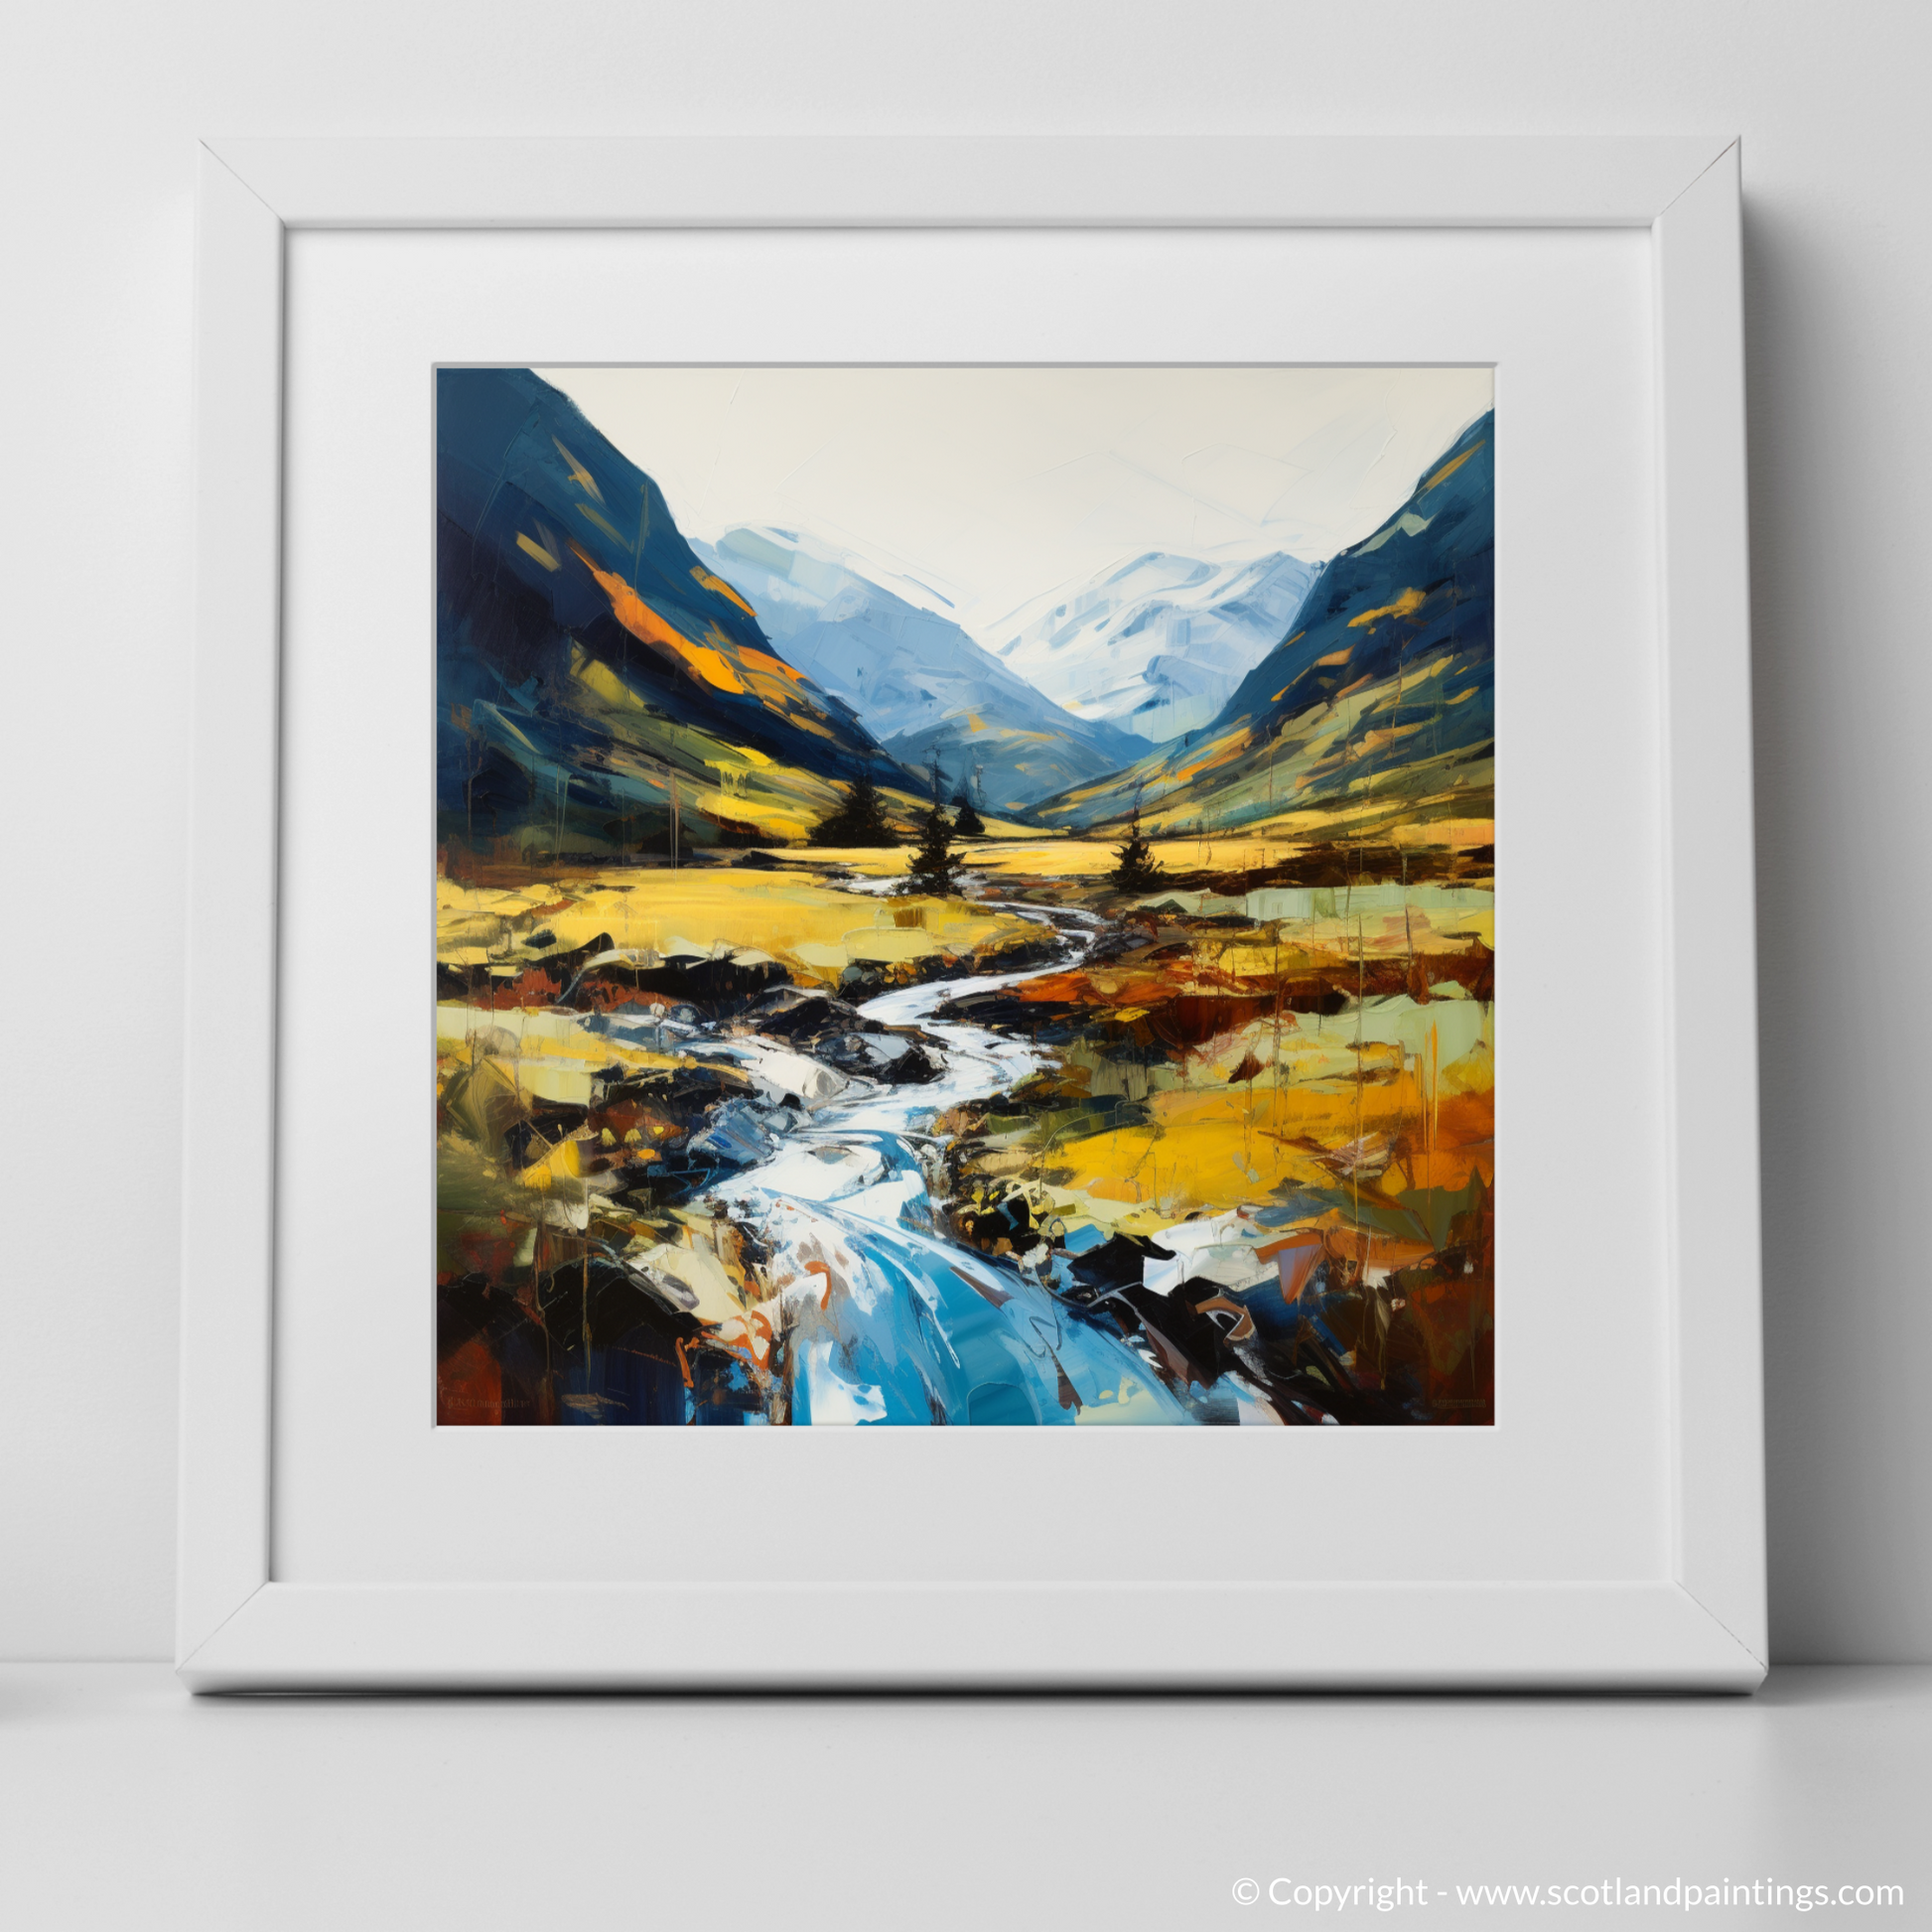 Art Print of Glen Nevis, Highlands with a white frame